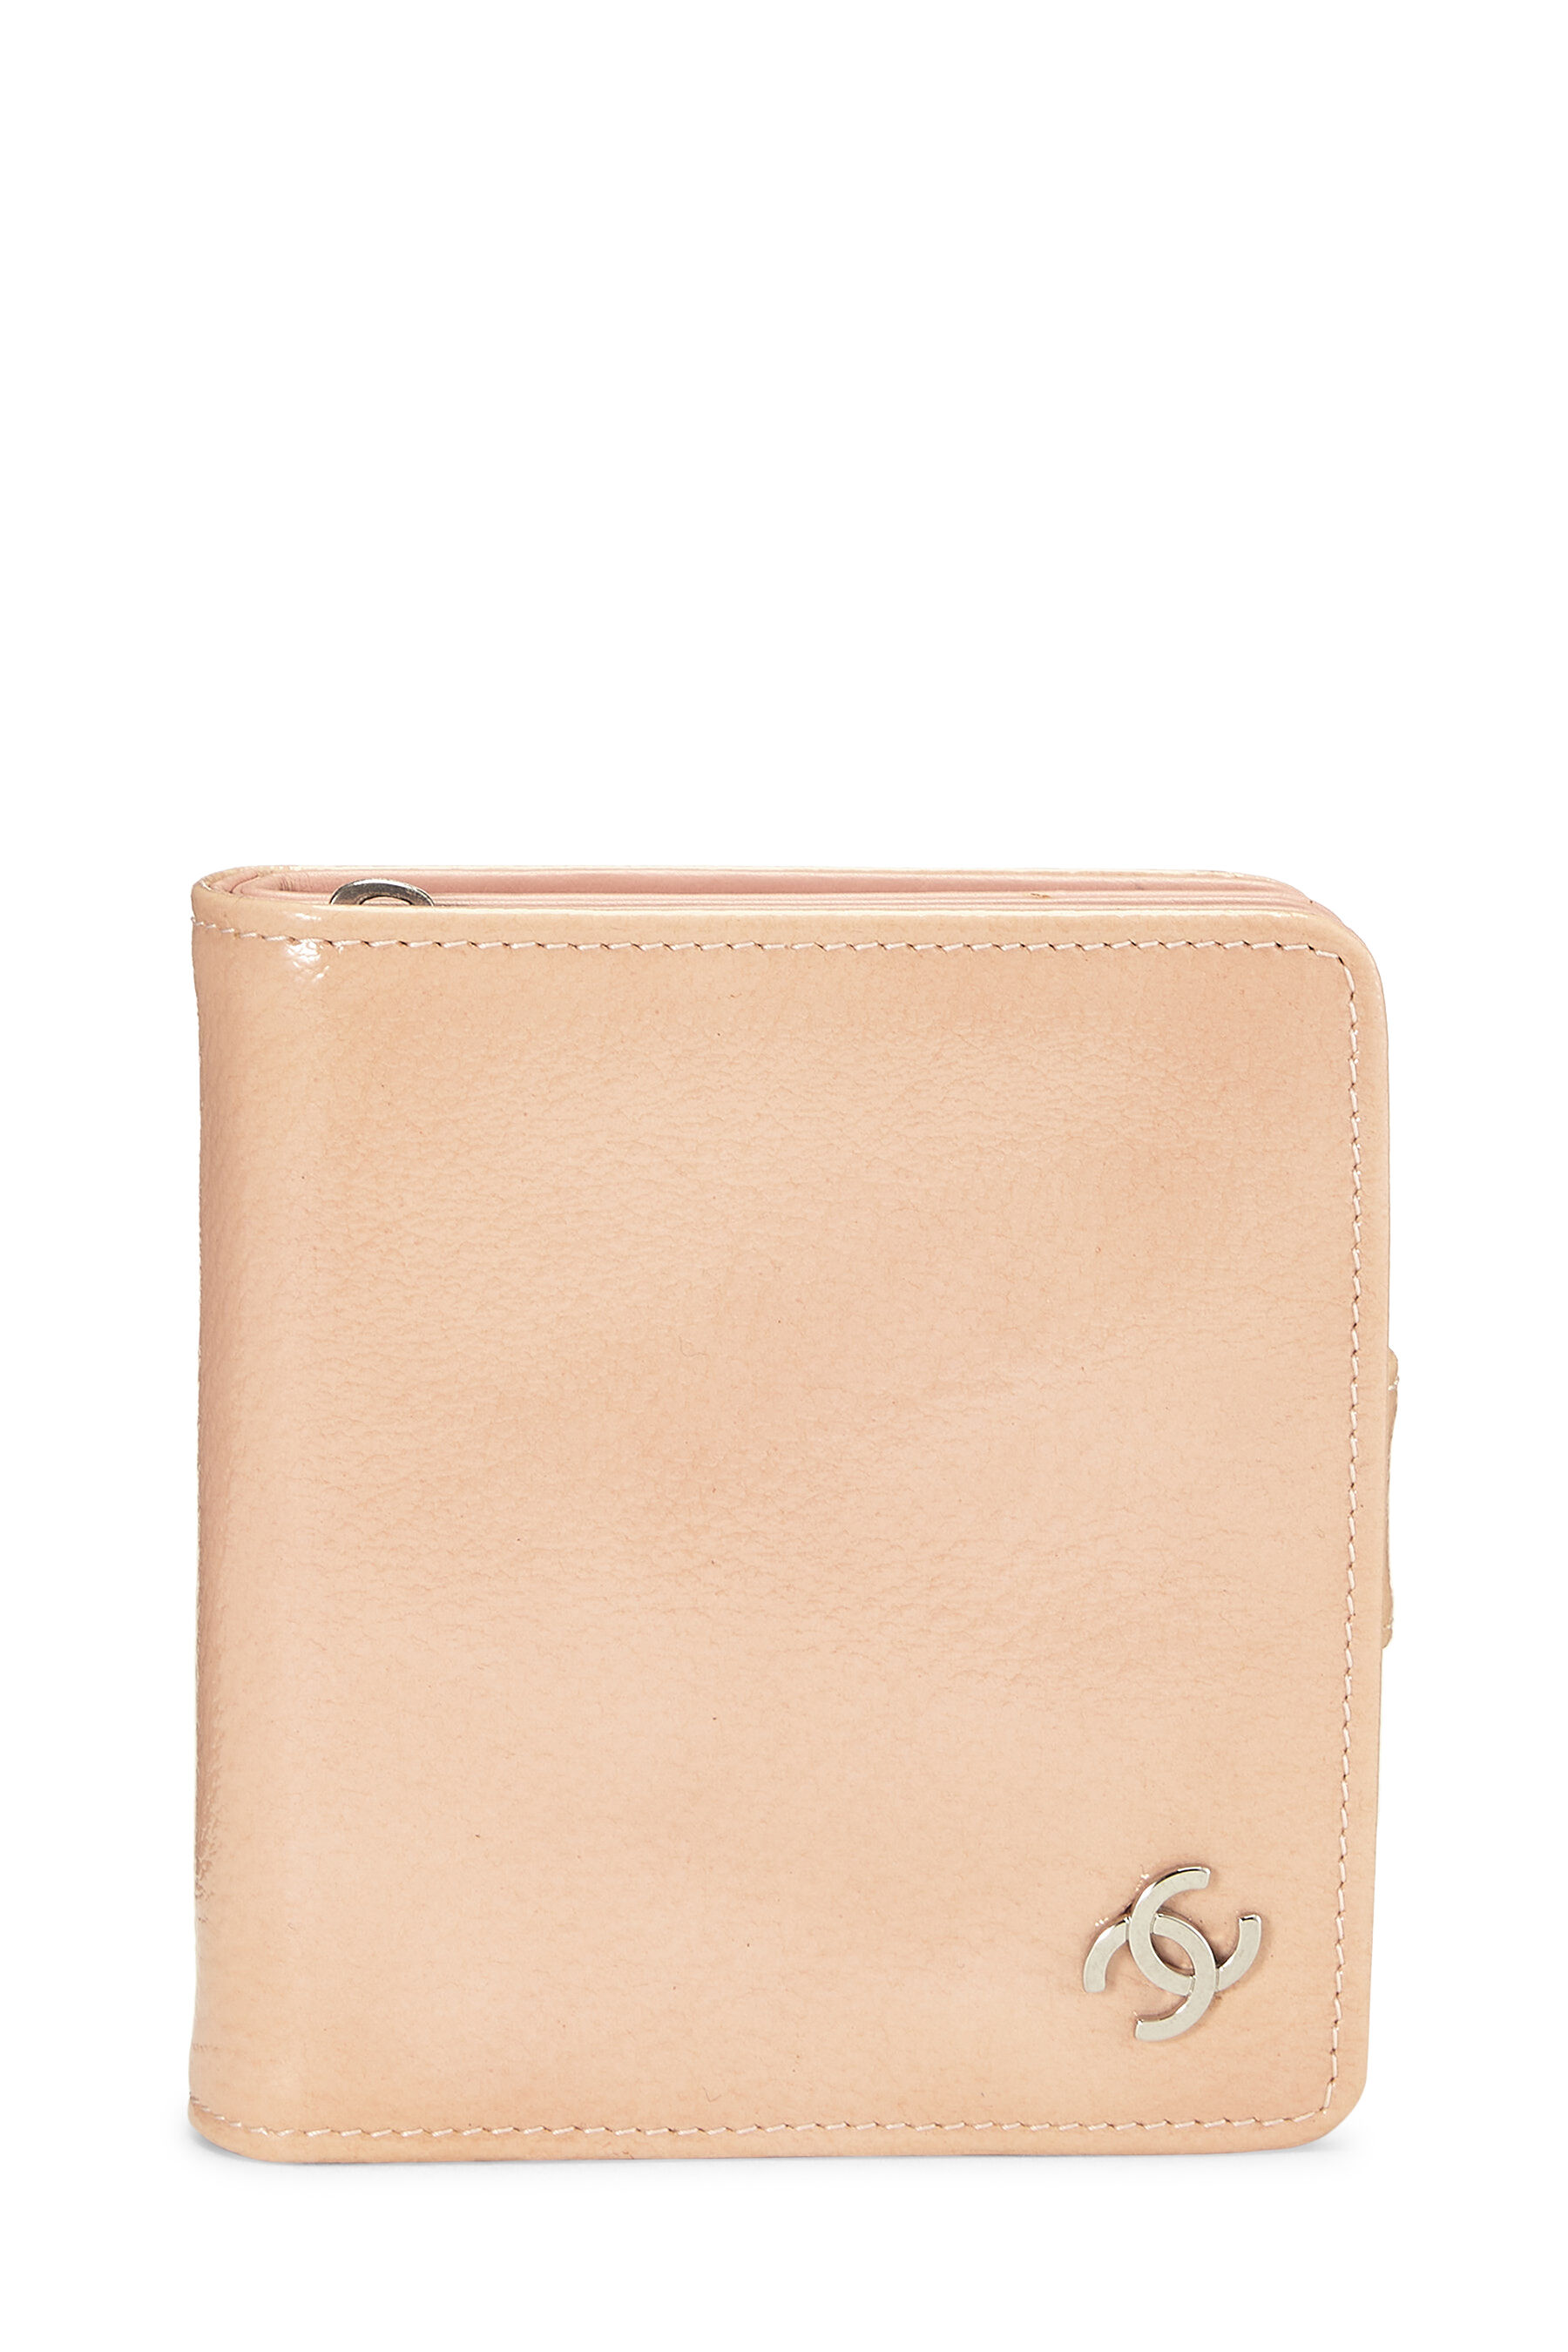 Louis Vuitton Zippy Coin Purse Wallet Rayures pink beige Card